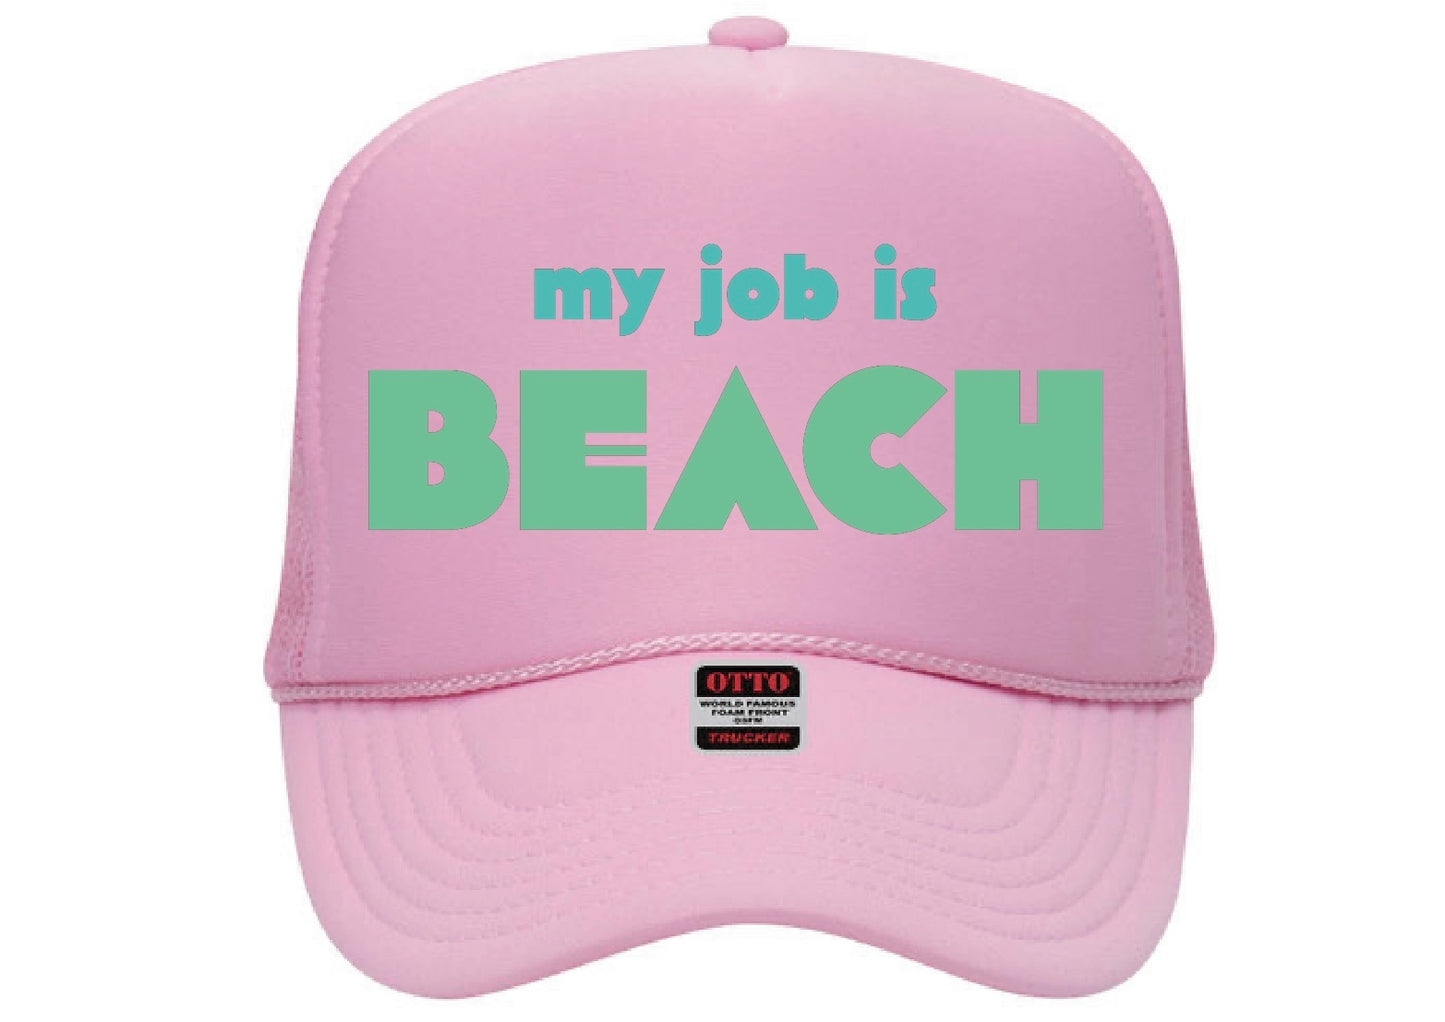 My job is BEACH (Barbie Movie)